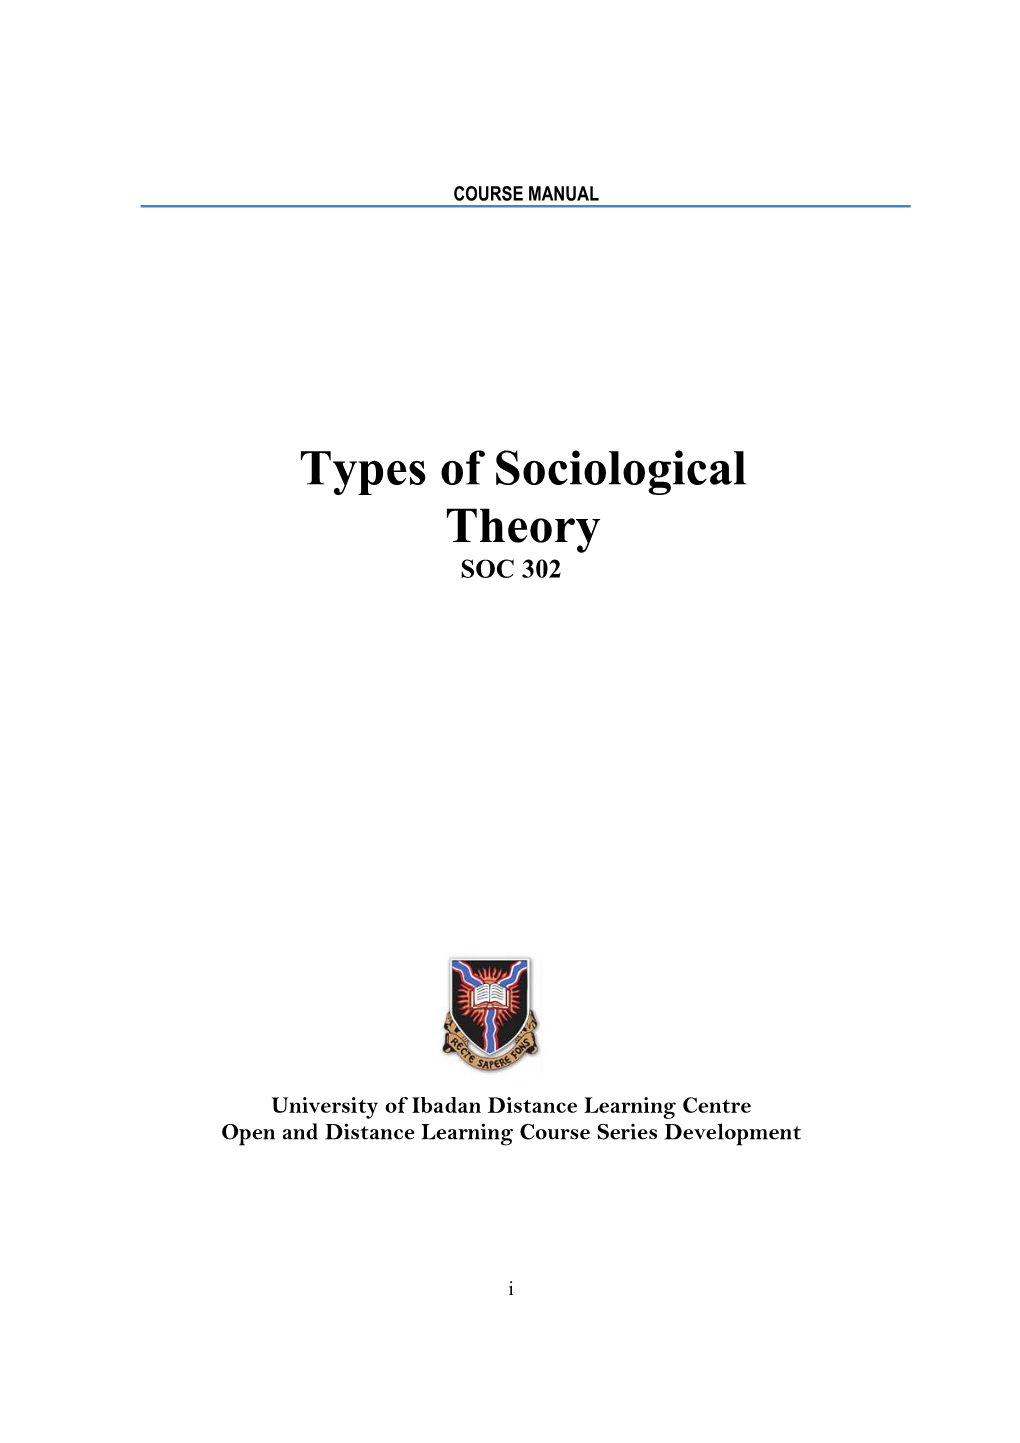 Sociological Theory SOC 302